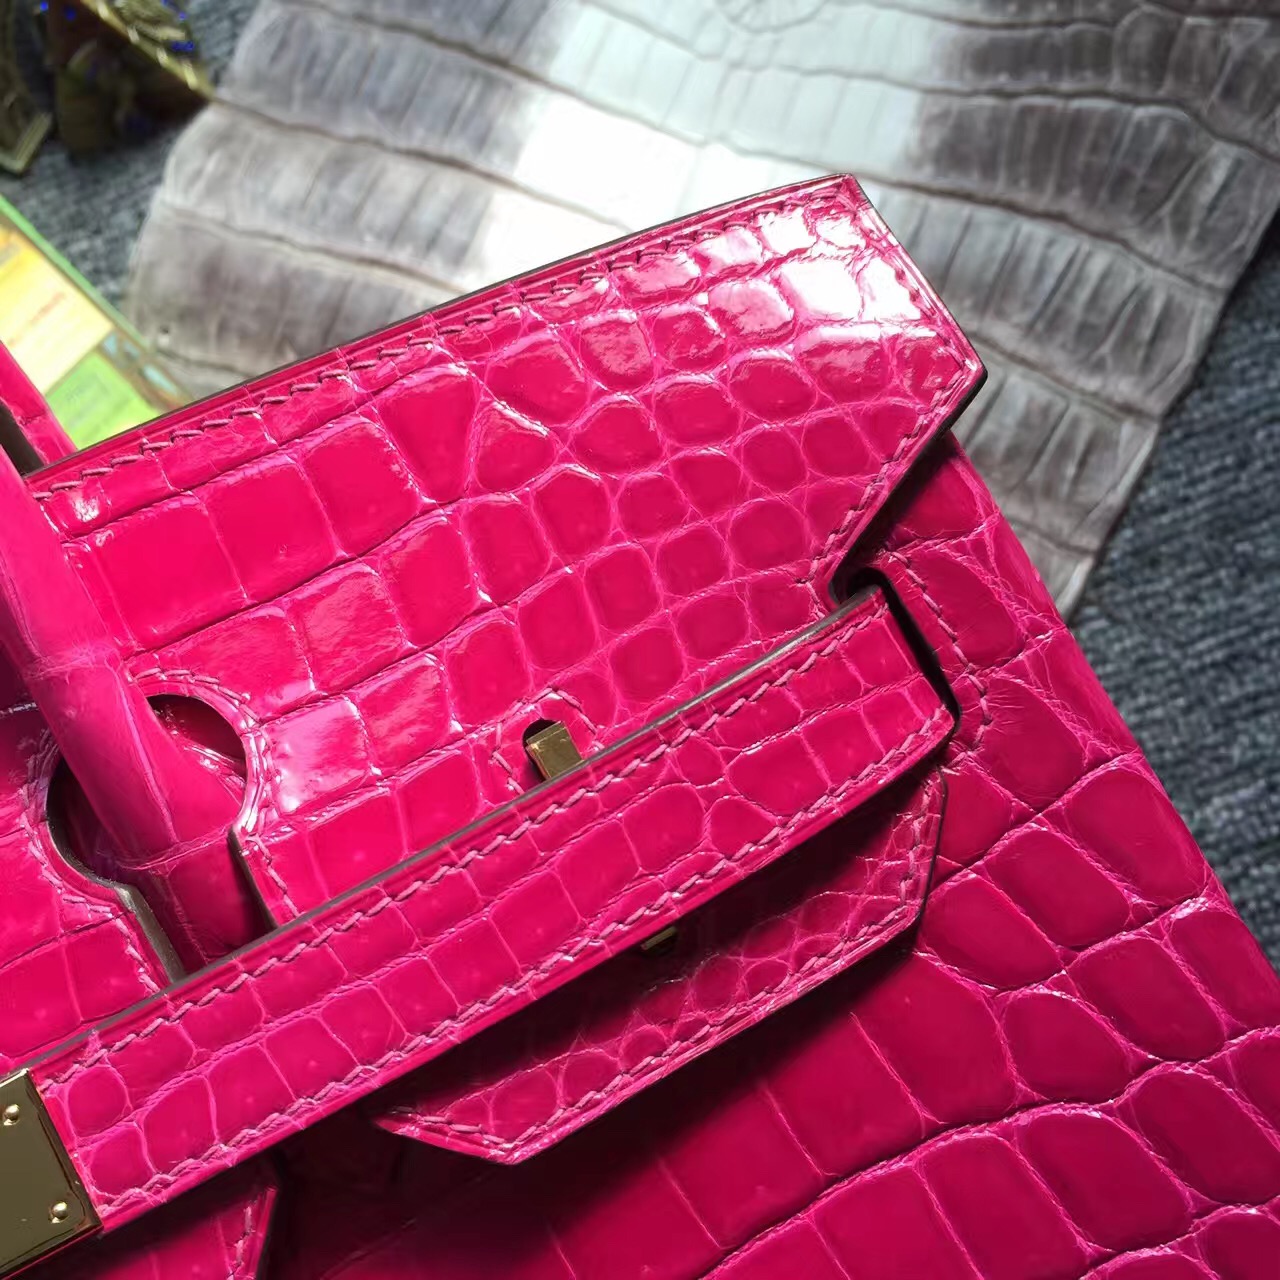 Hot Sale Hermes Crocodile Shiny Leather Birkin Bag 30cm in J5 Rose Scheherazade